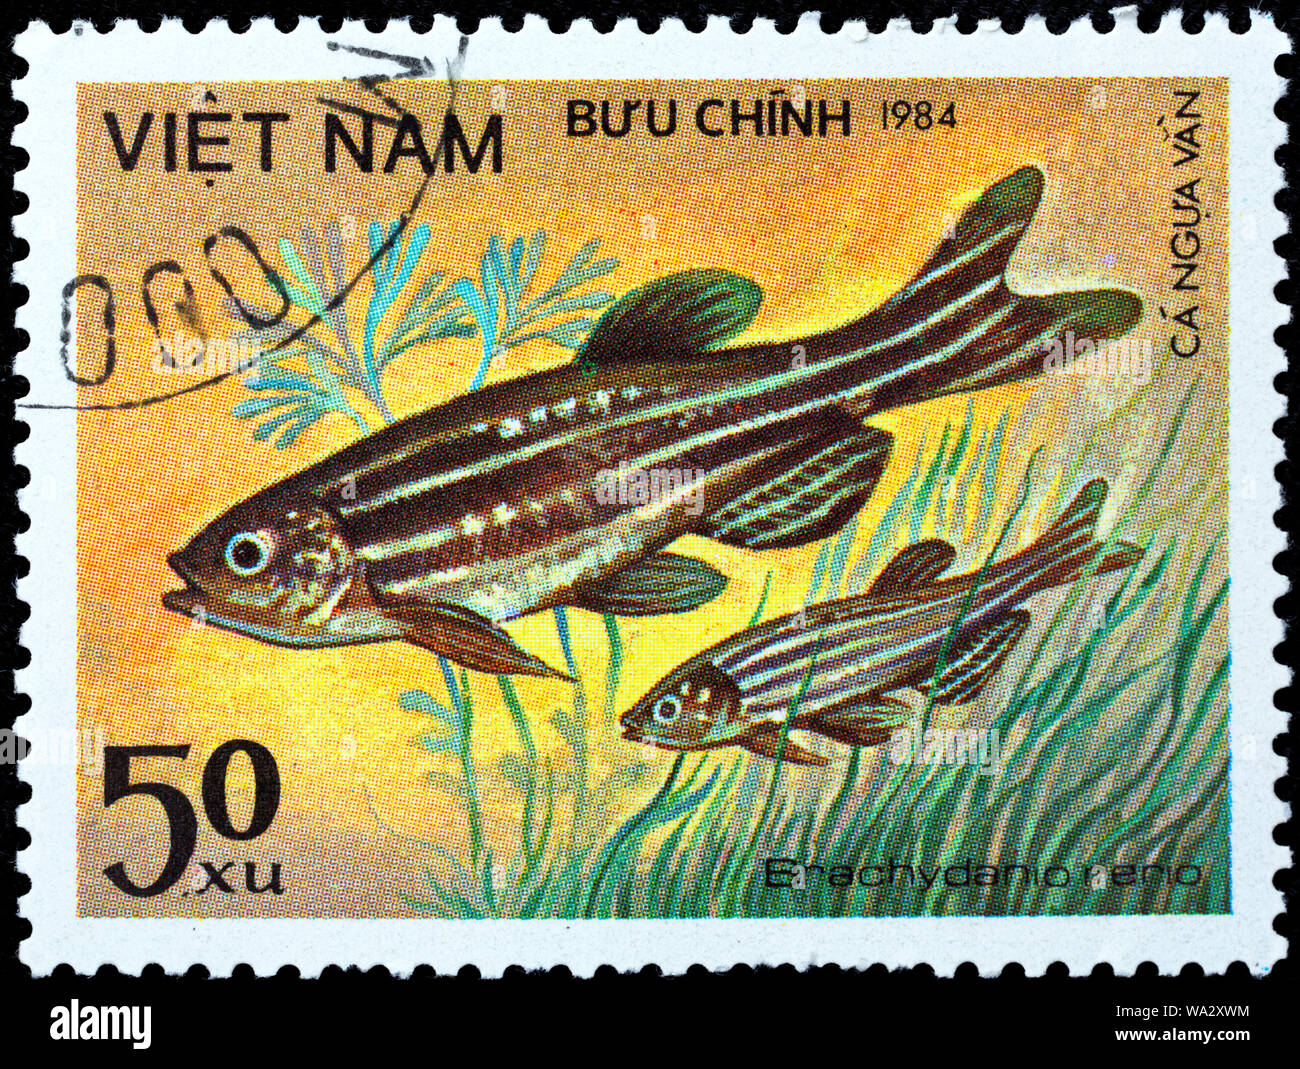 Danio rerio, Brachydanio rerio, Zebrafish, postage stamp, Vietnam, 1984 Stock Photo